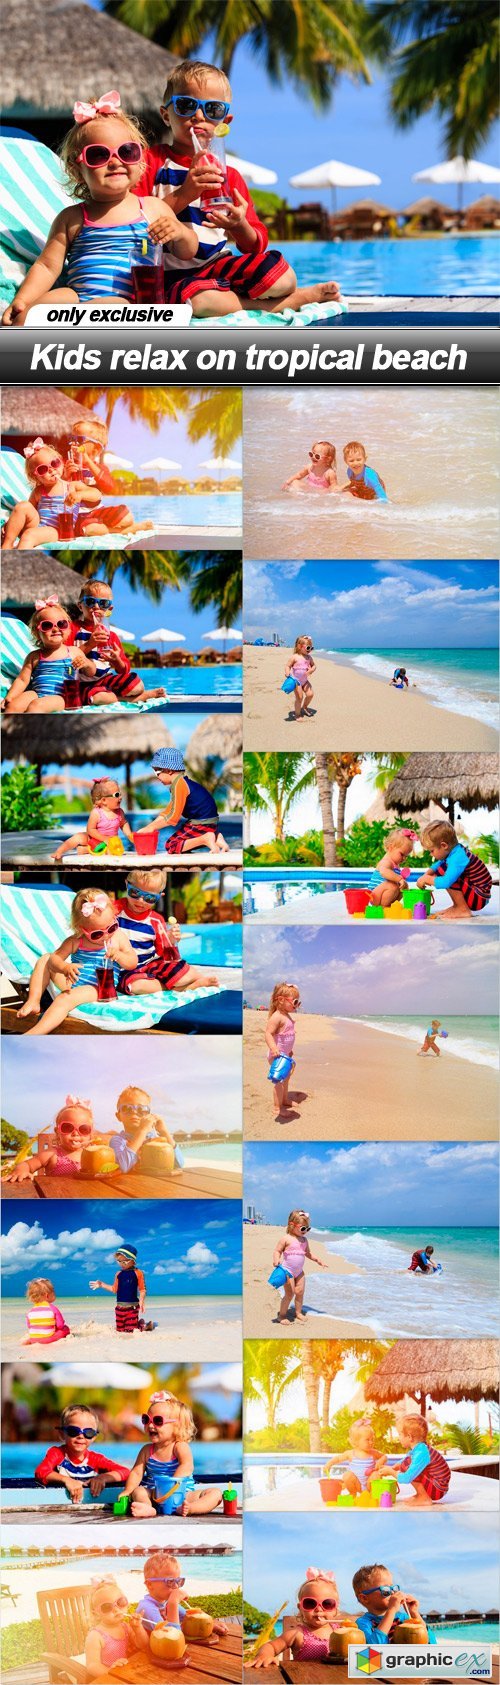 Kids relax on tropical beach - 15 UHQ JPEG